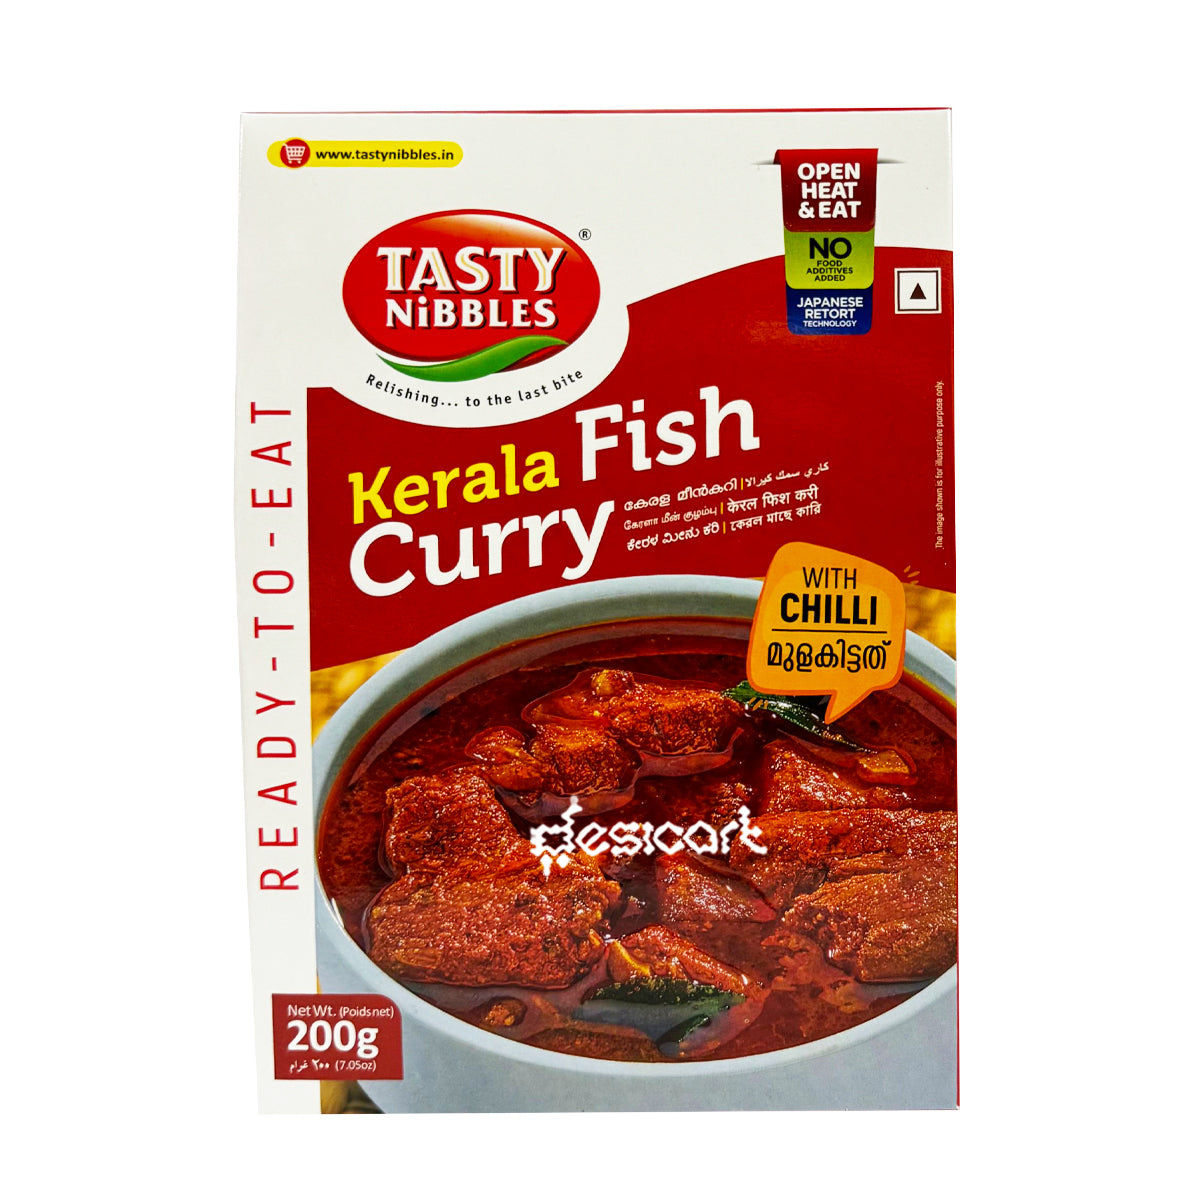 Tasty Nibbles kerala Fish Curry Chilli 200g